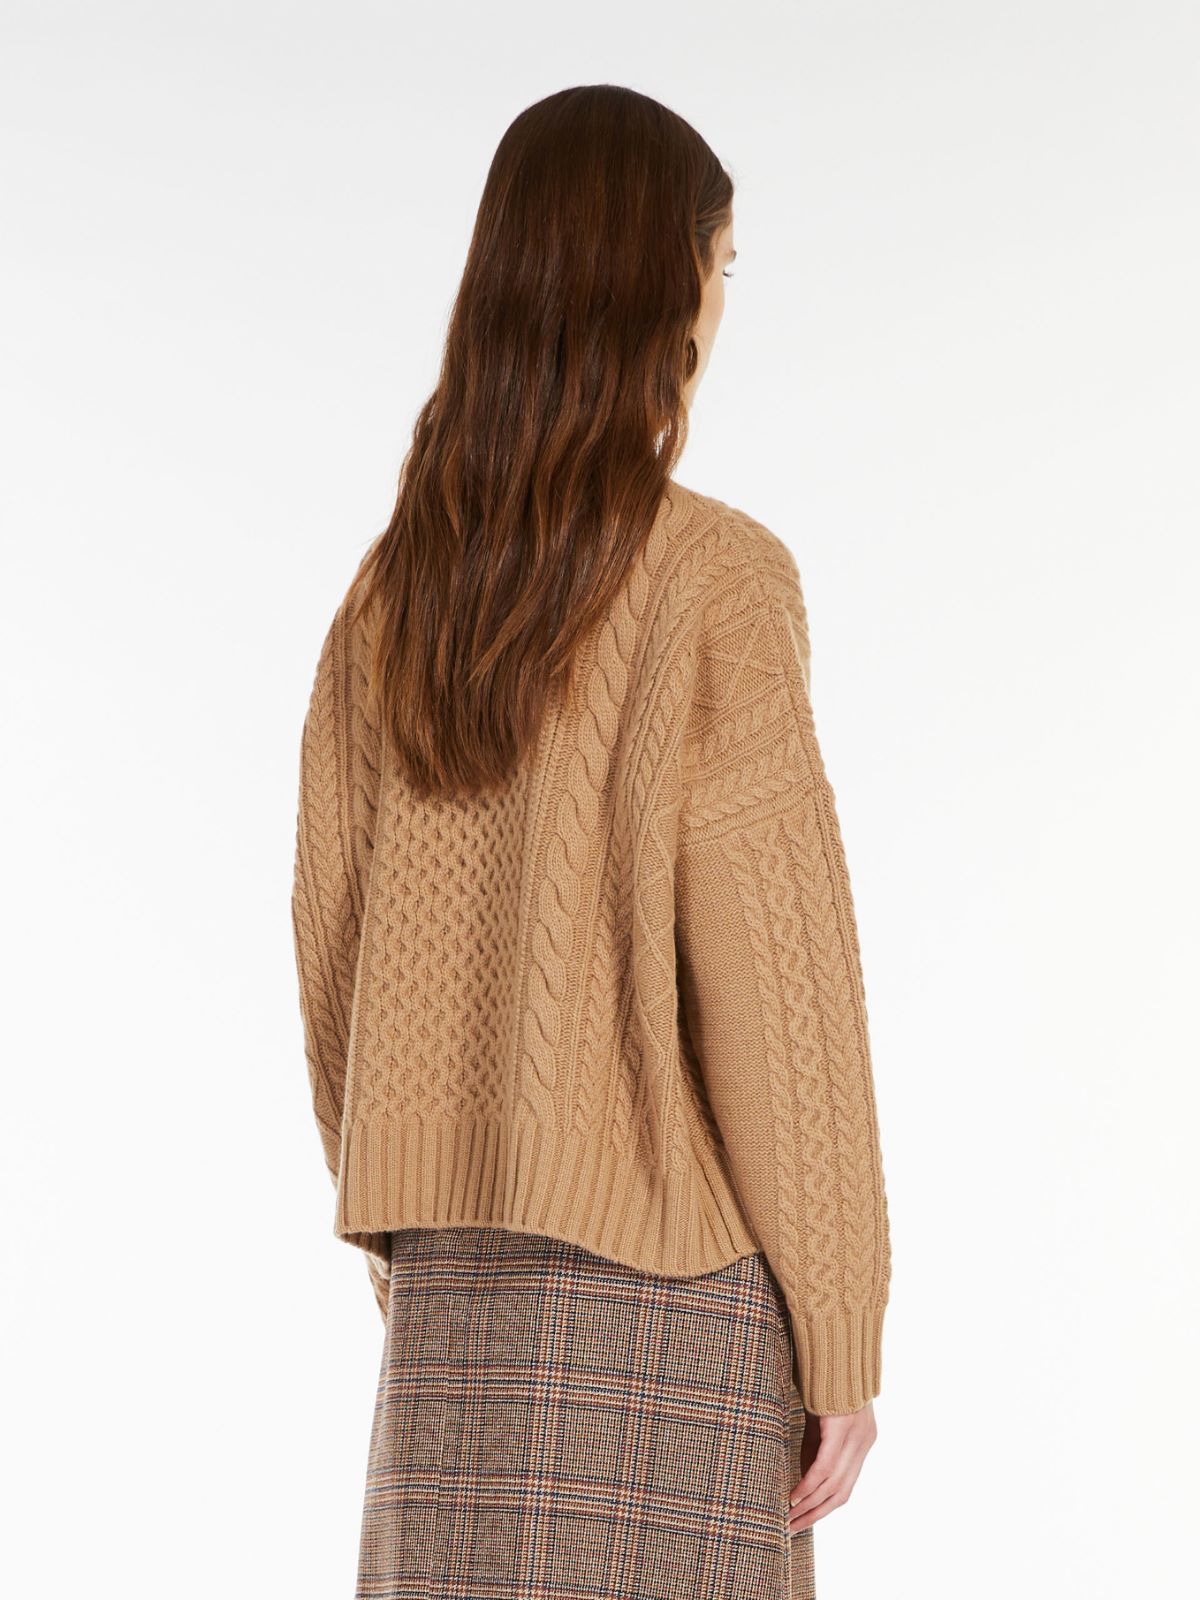 Carded wool yarn sweater - CAMEL - Weekend Max Mara - 3